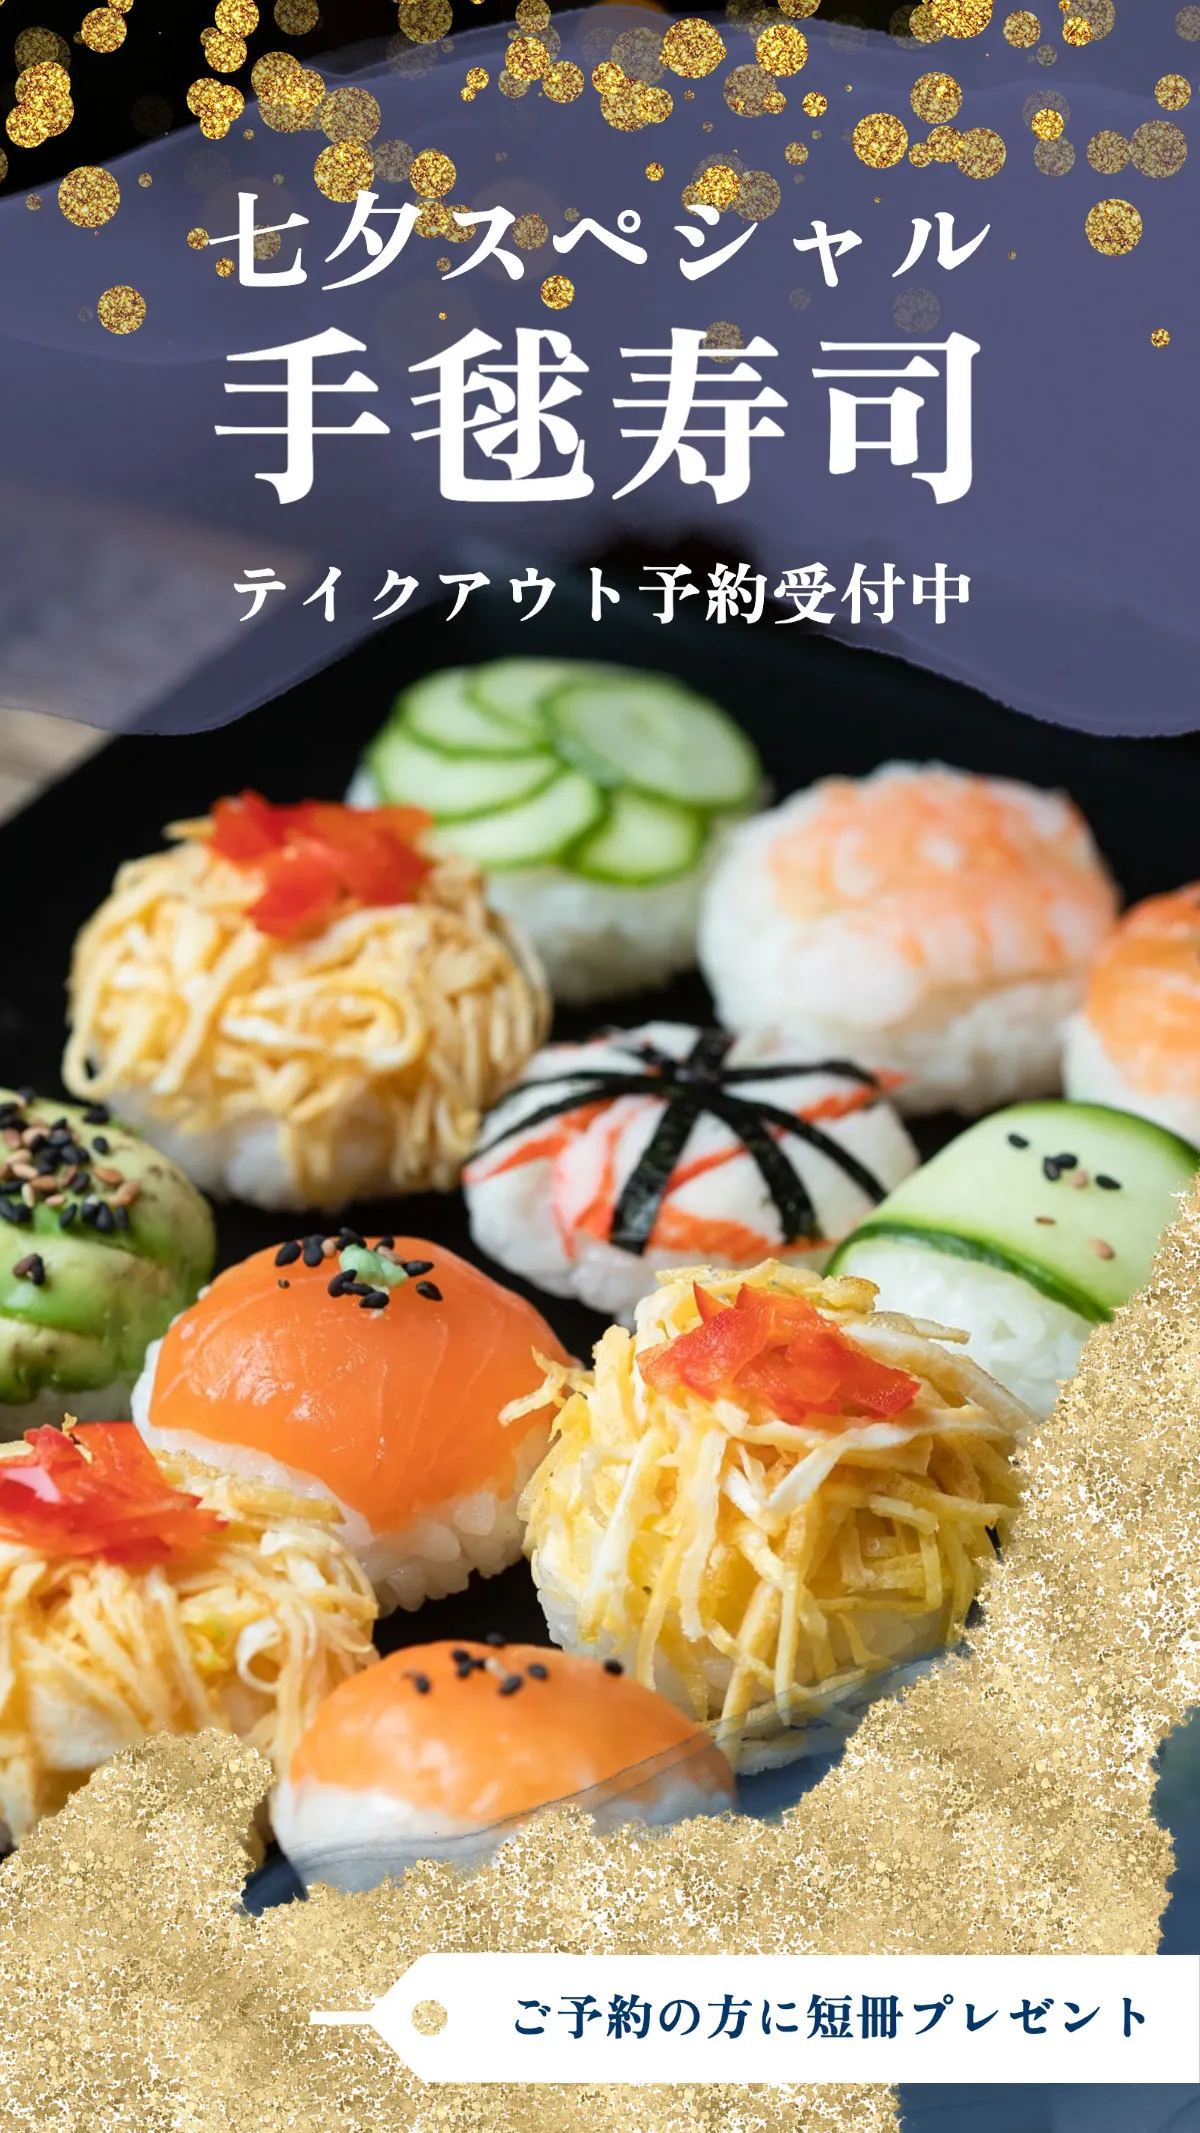 Tanabata Temari sushi SNS season instagram story